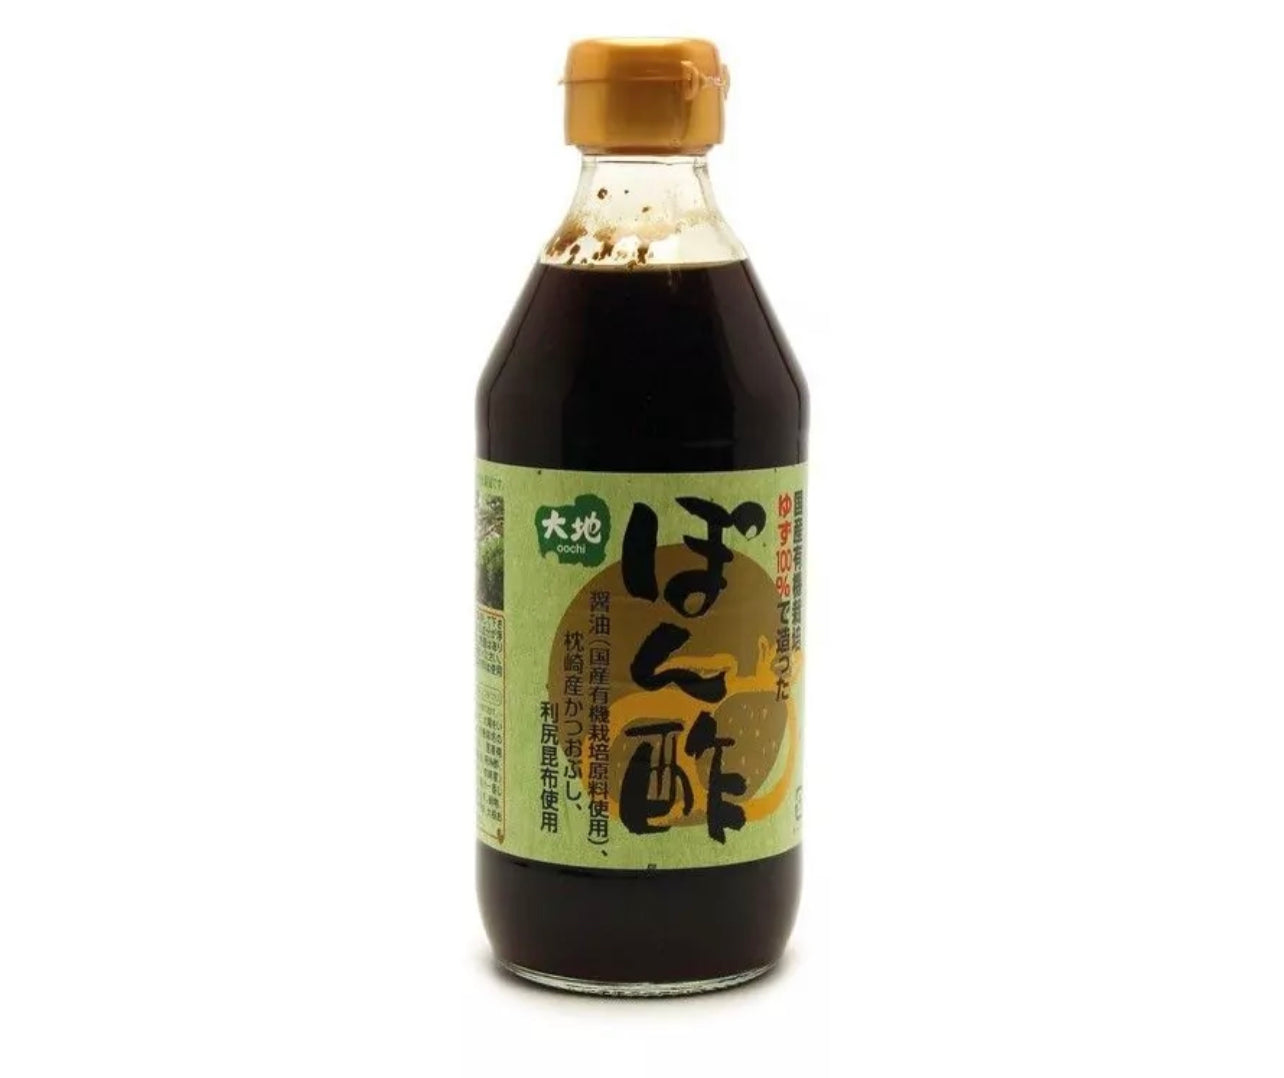 Sennari ponzu yuzu and sudachi sauce - 360ml